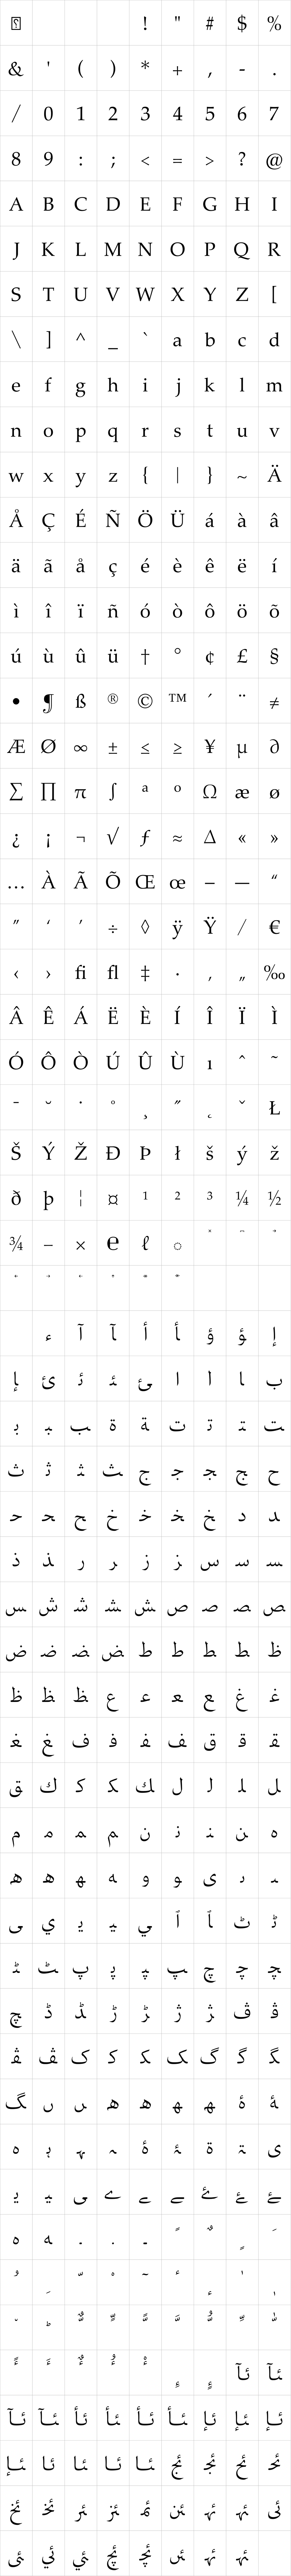 Palatino Arabic Regular image